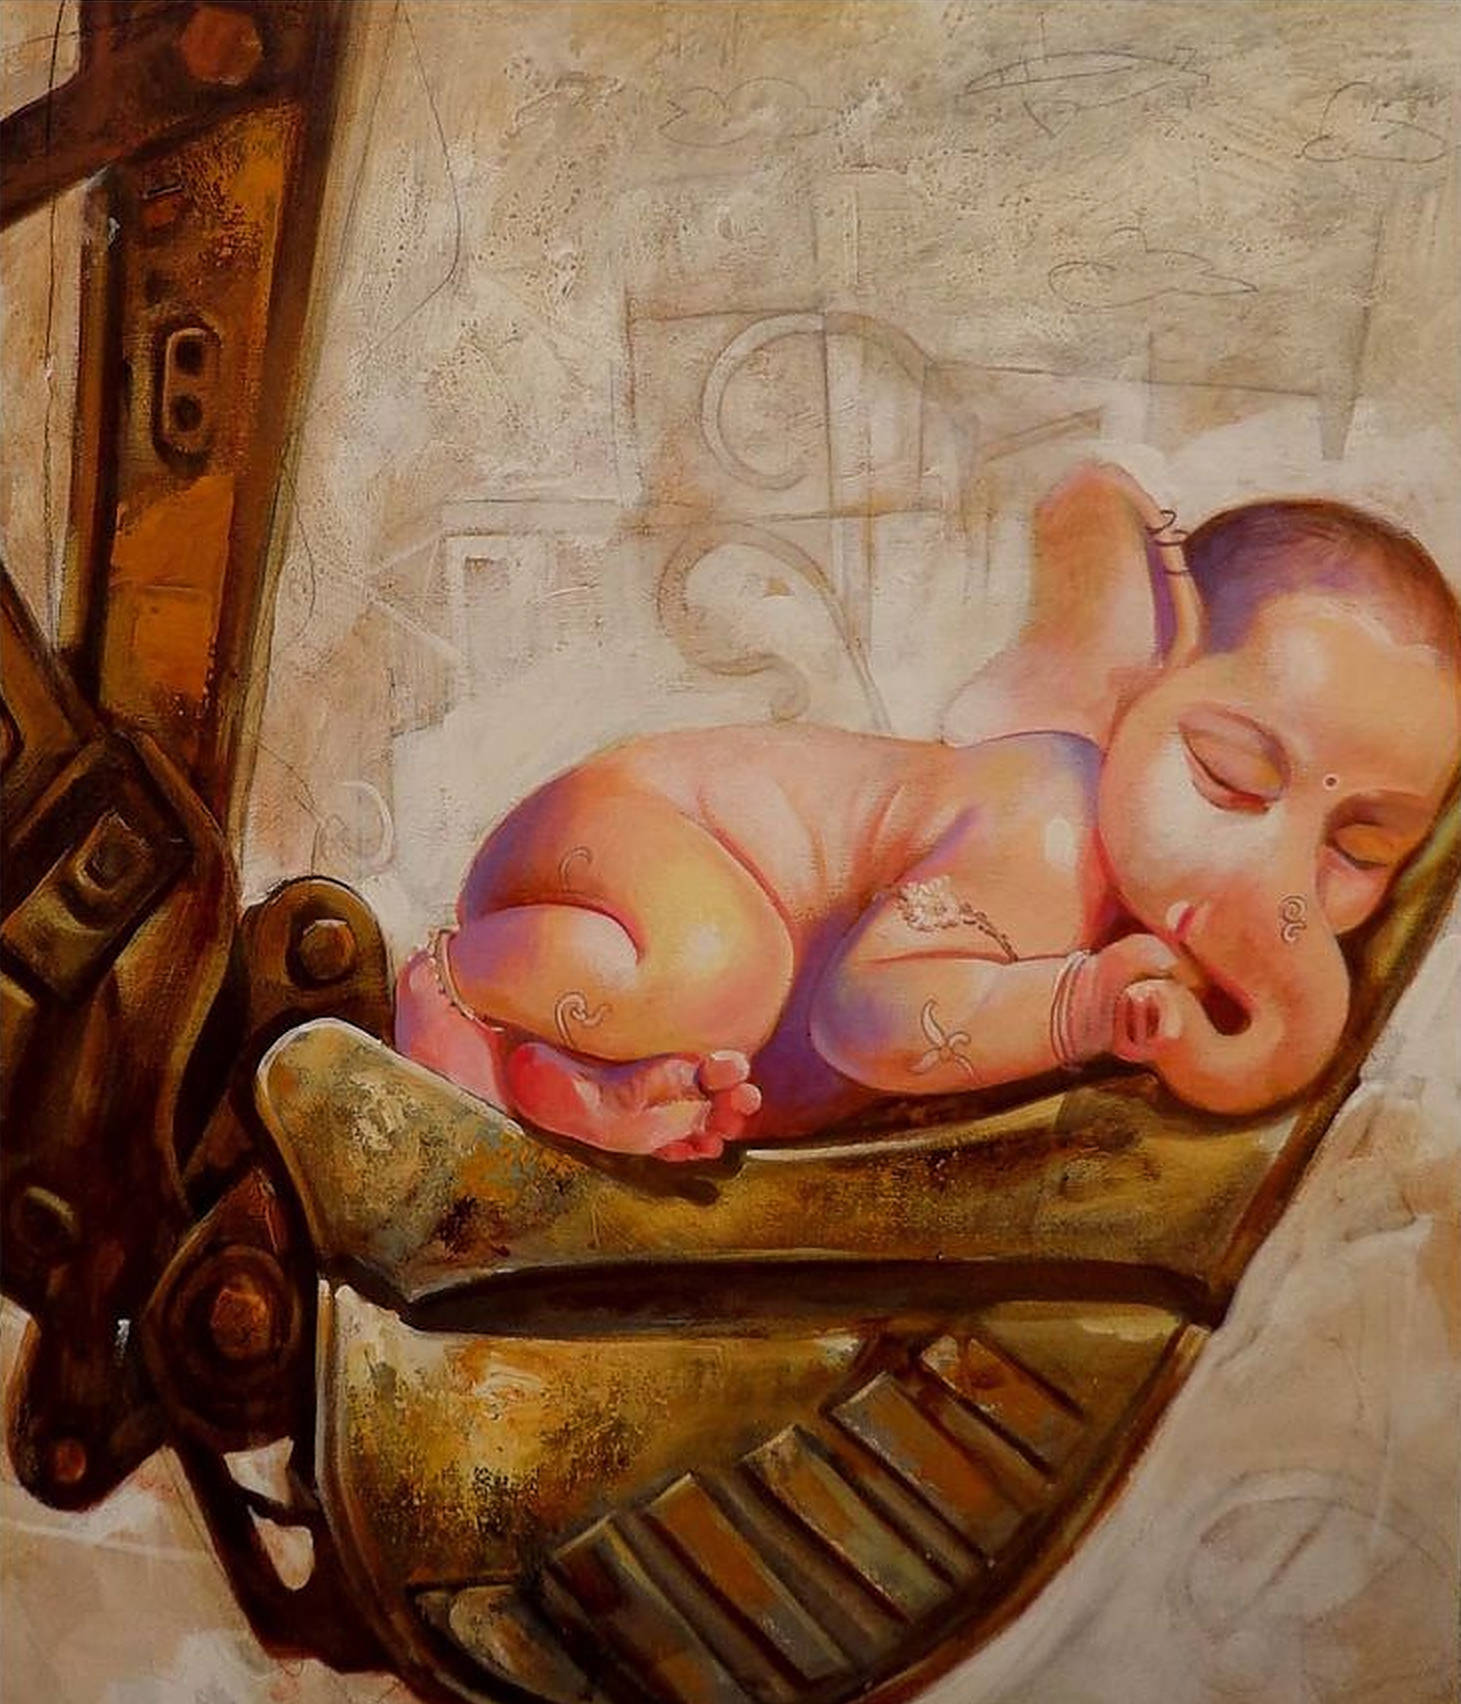 Sleeping Baby Ganesh Art Wallpaper